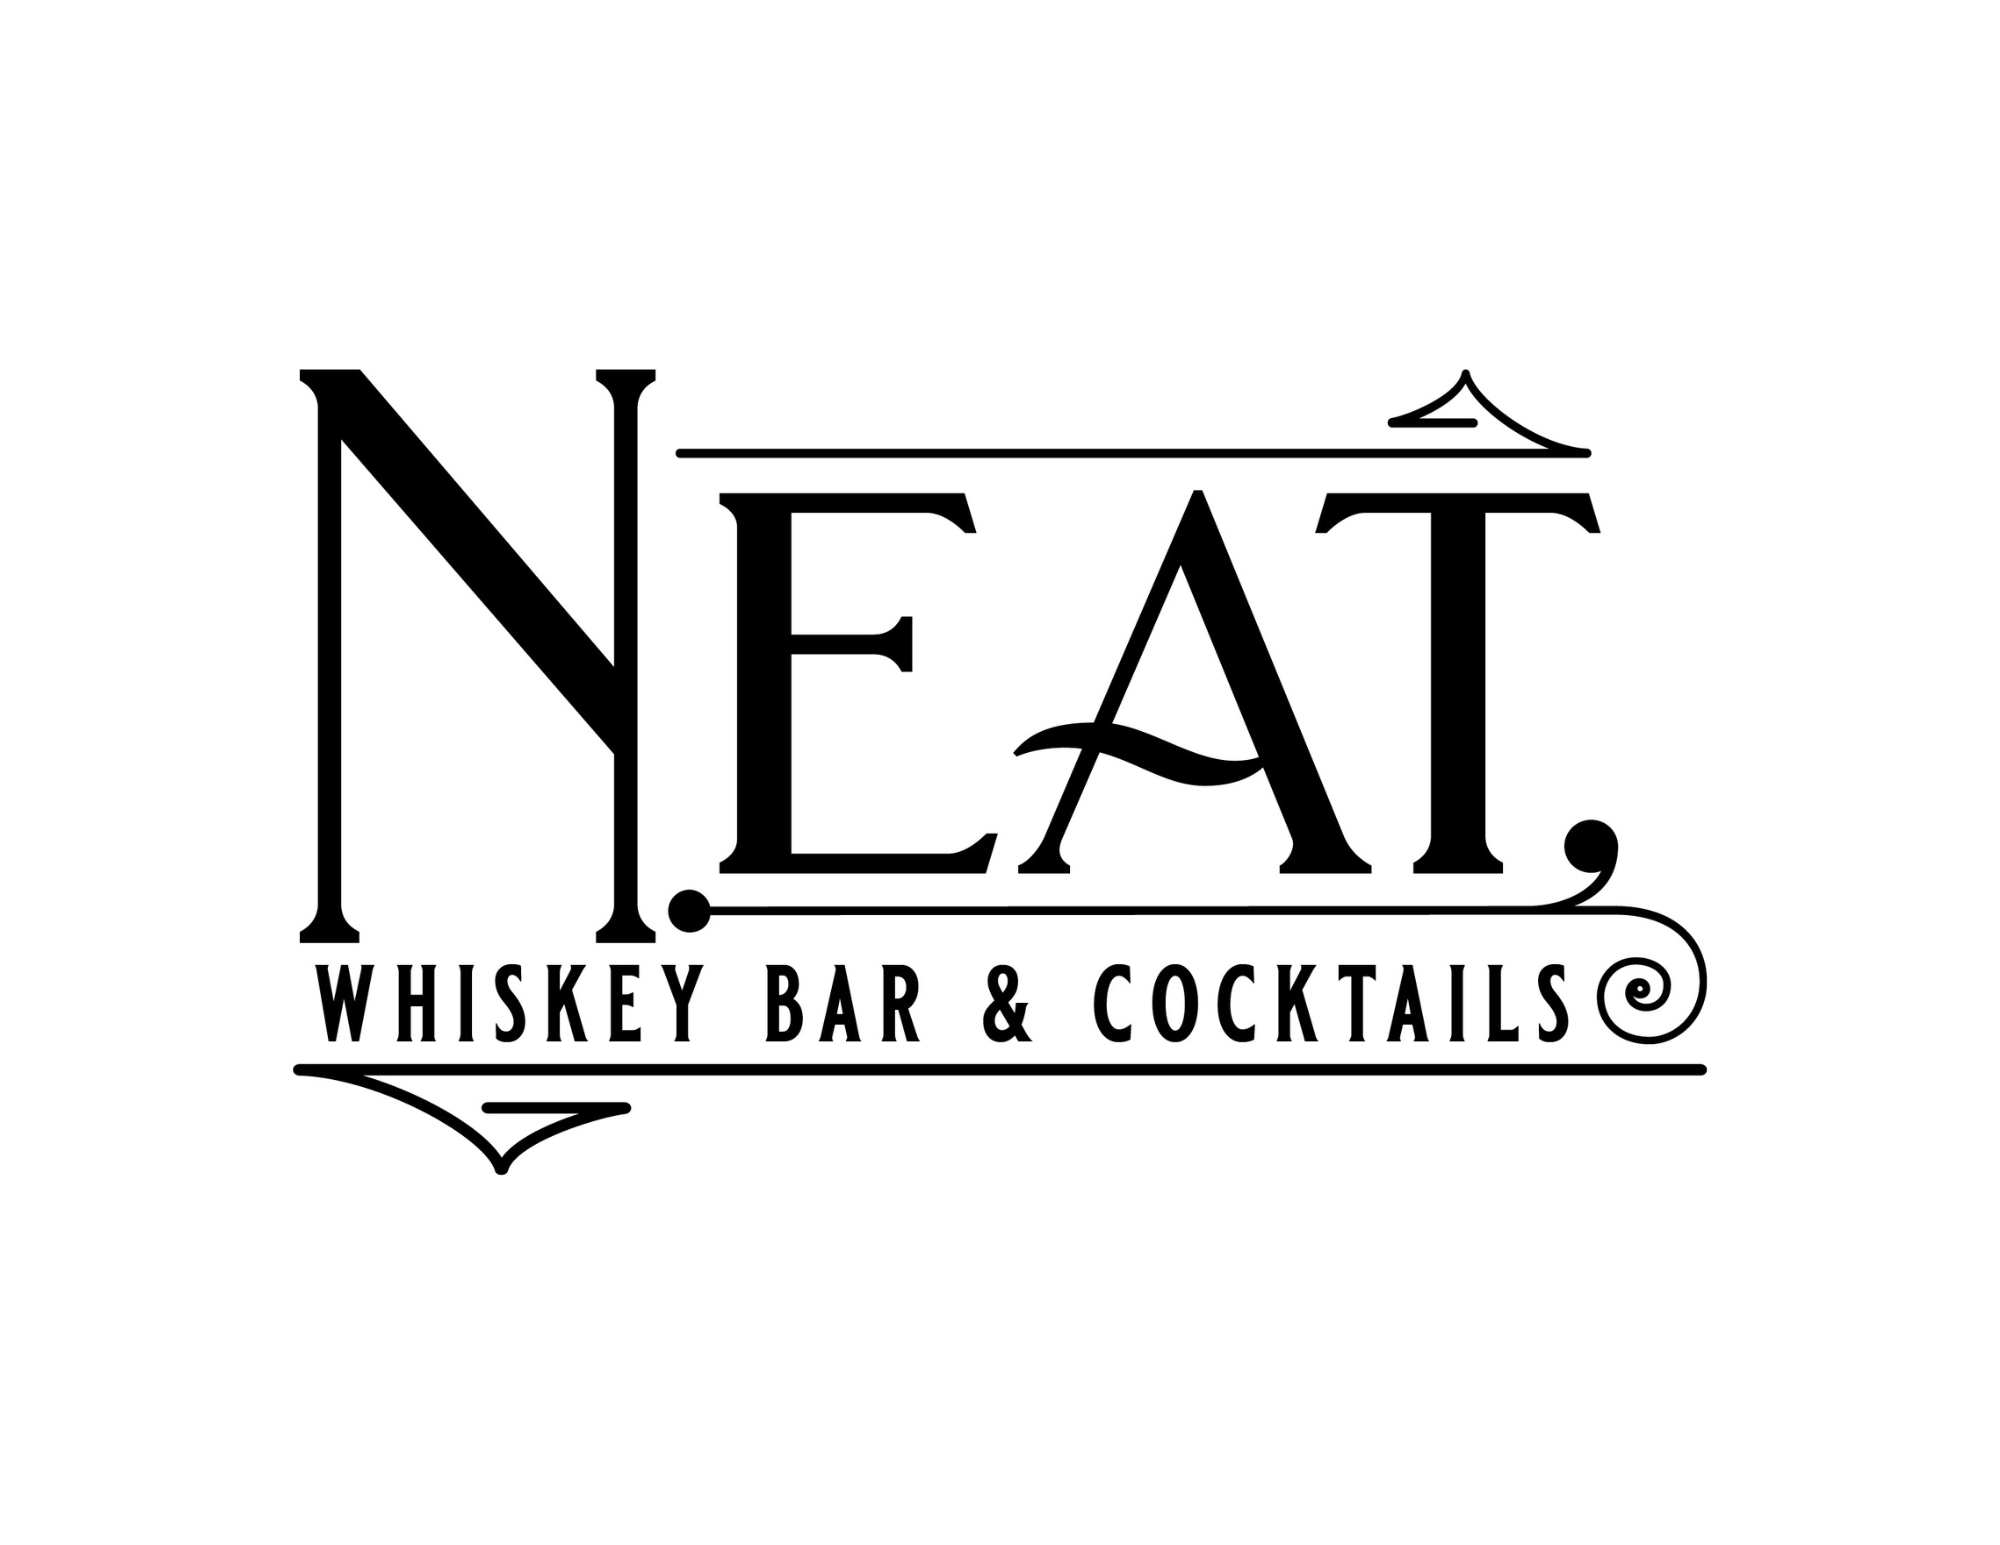 Neat Whiskey Bar